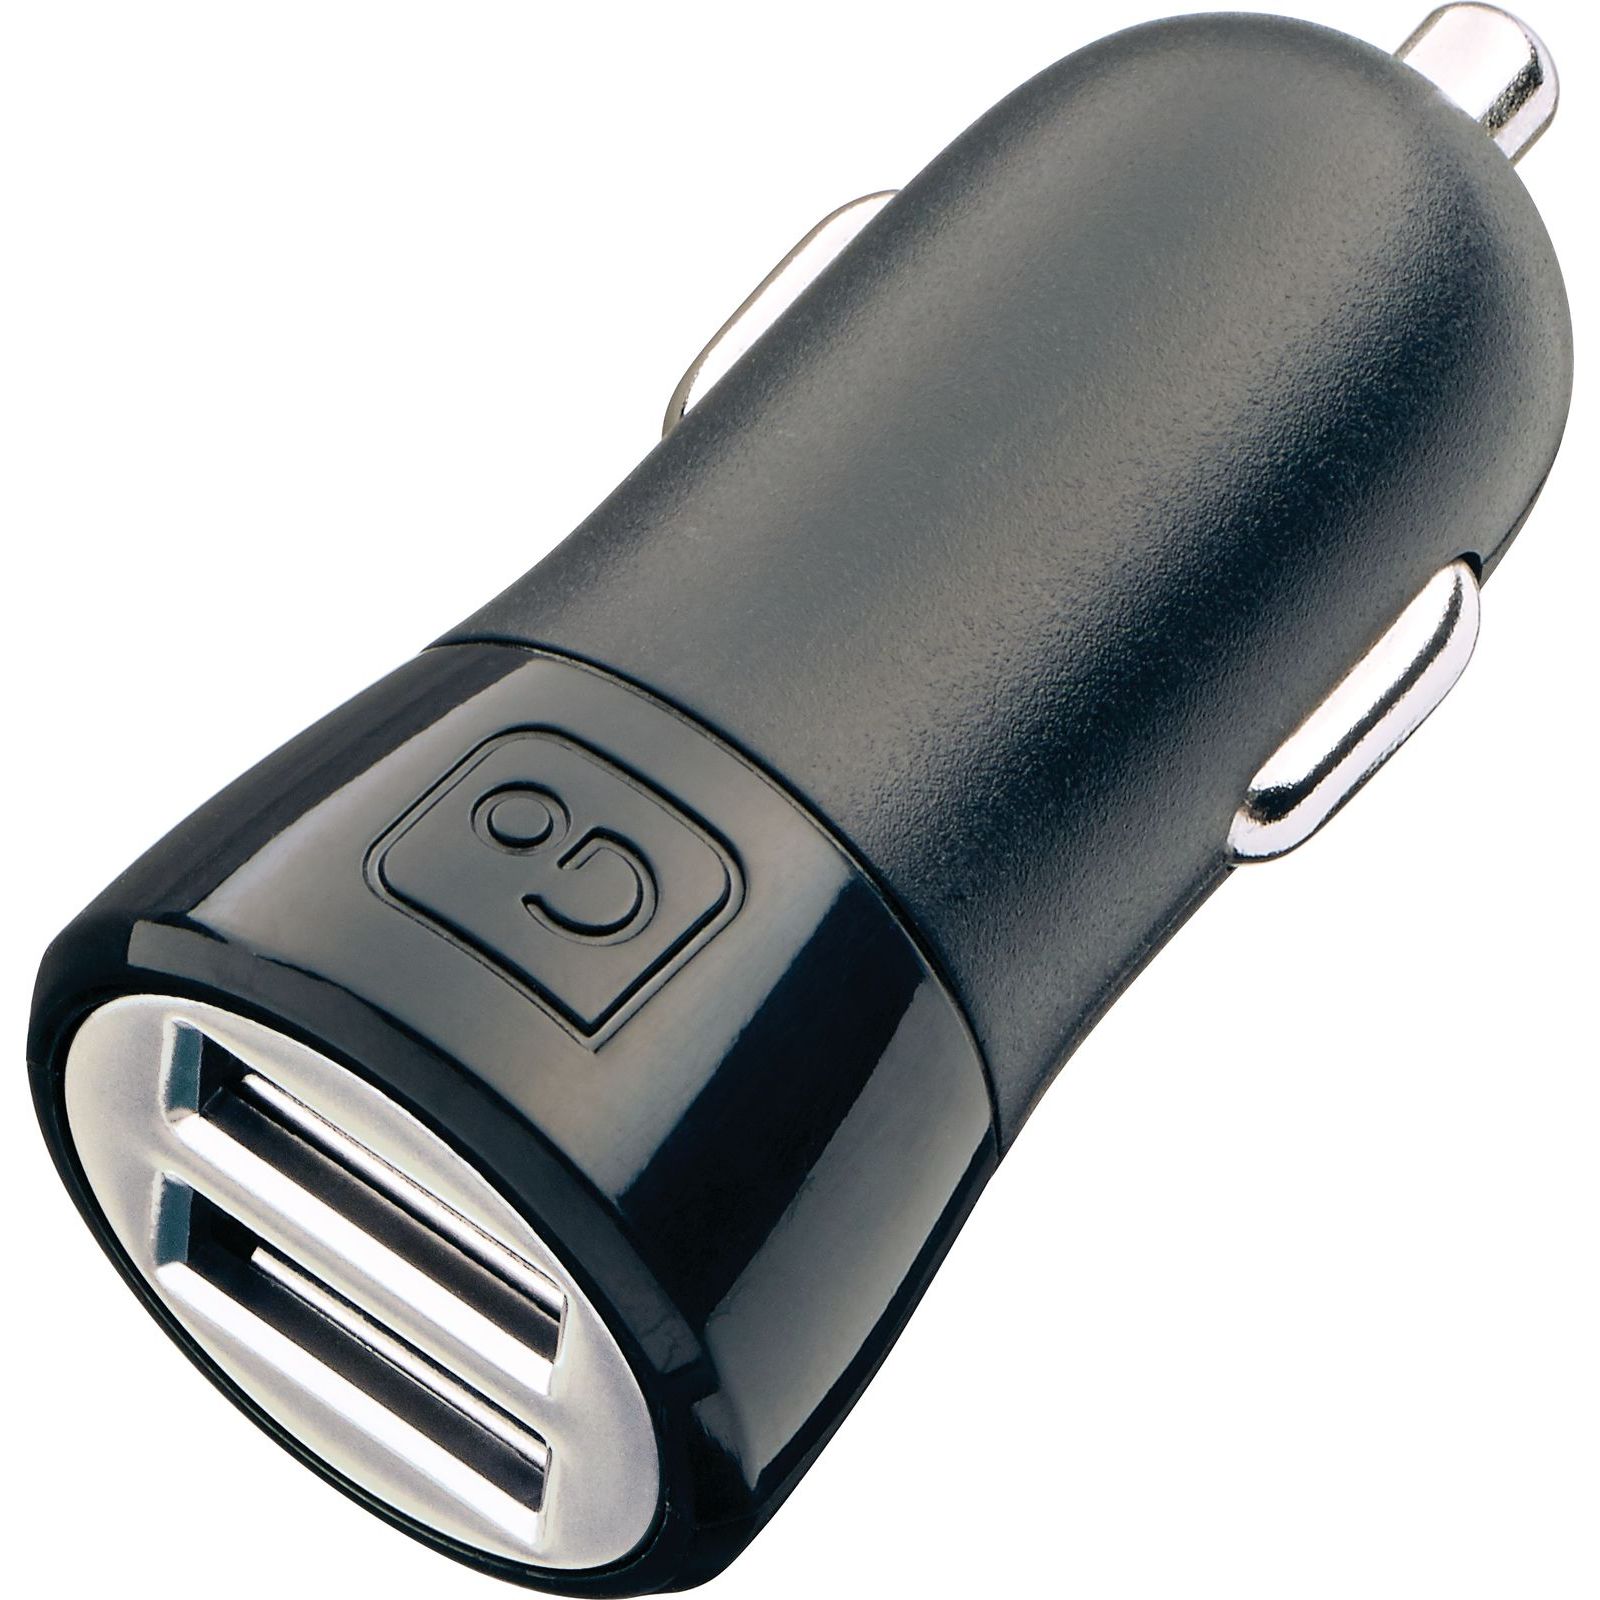 4.2A Dual USB Socket Car Charger Cigarette Lighter Power Adapter